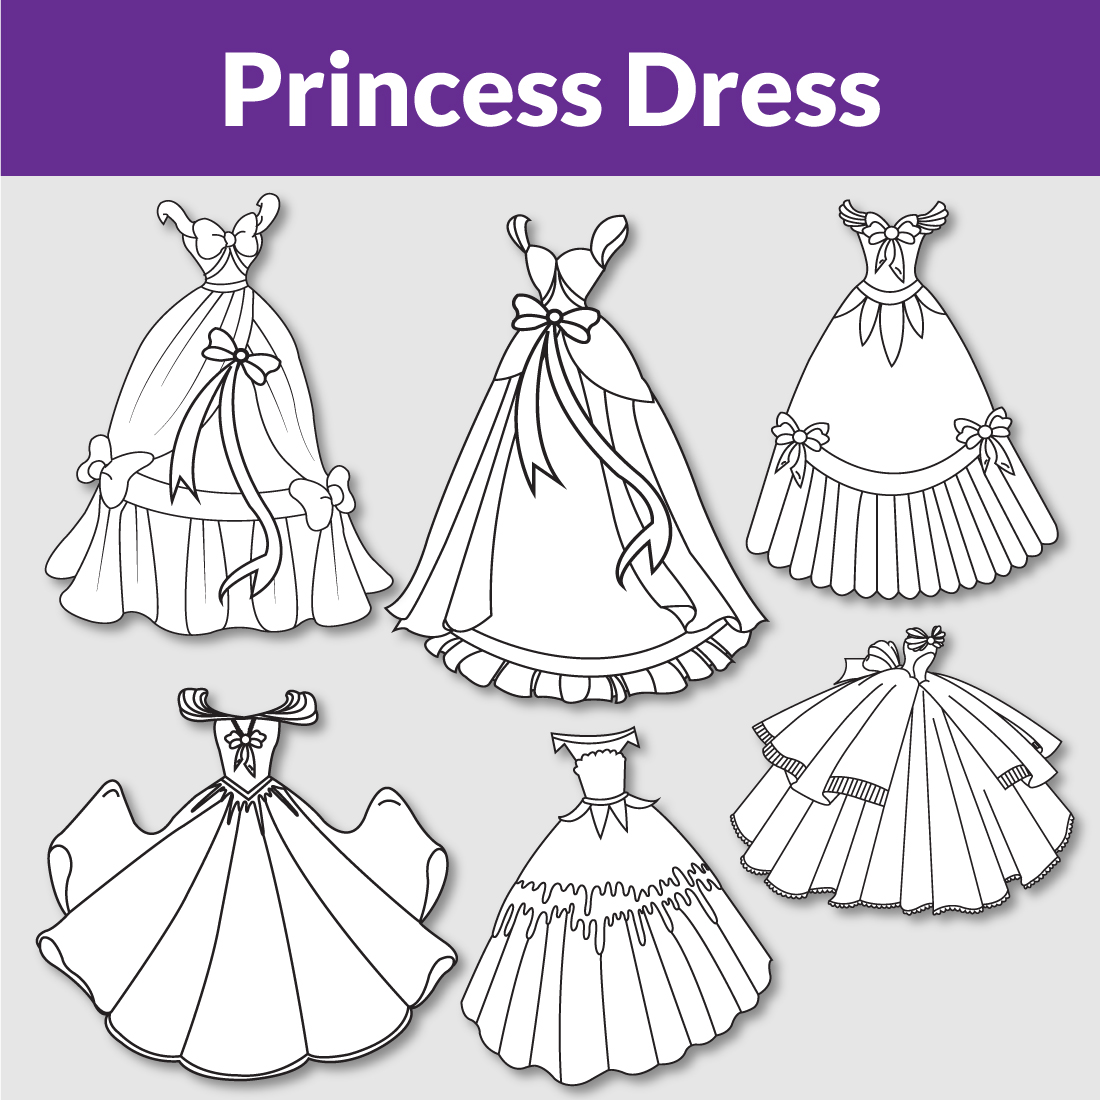 Princess Dress Master Bundle cover image.